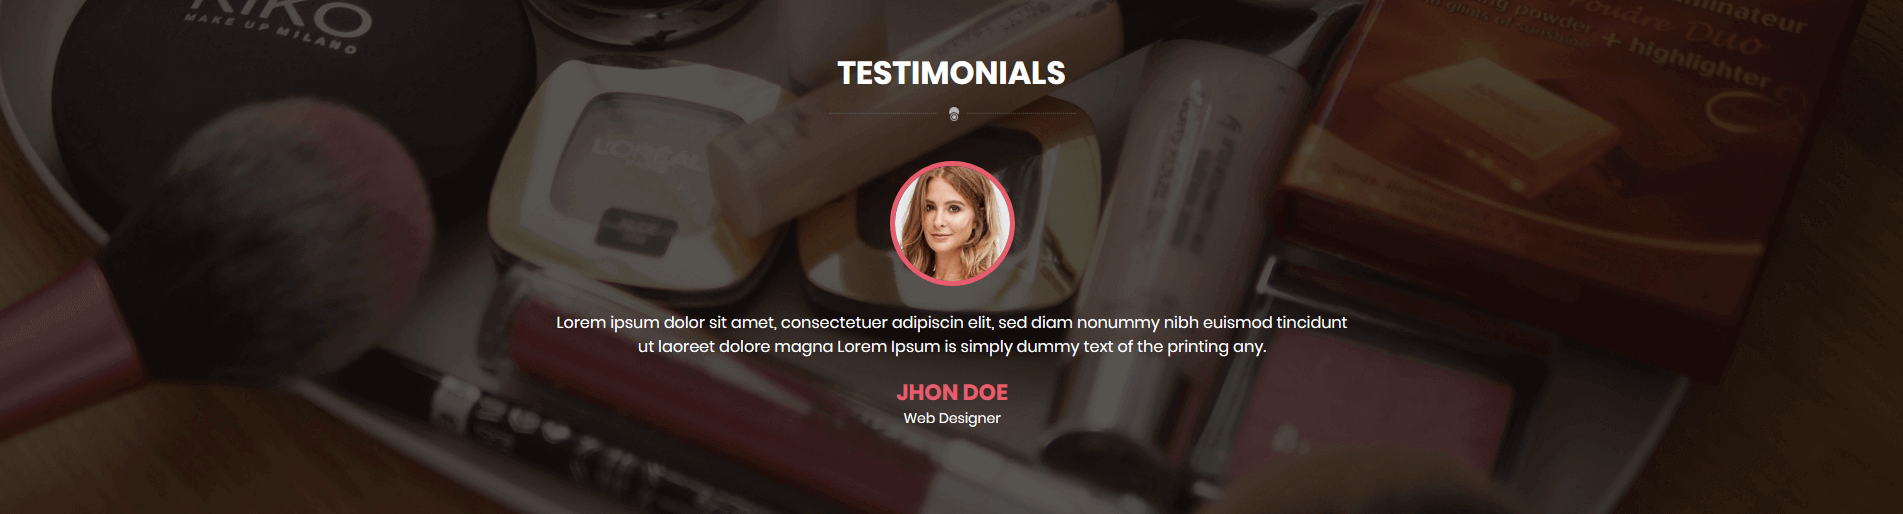 Cosmetics - Home Testimonials